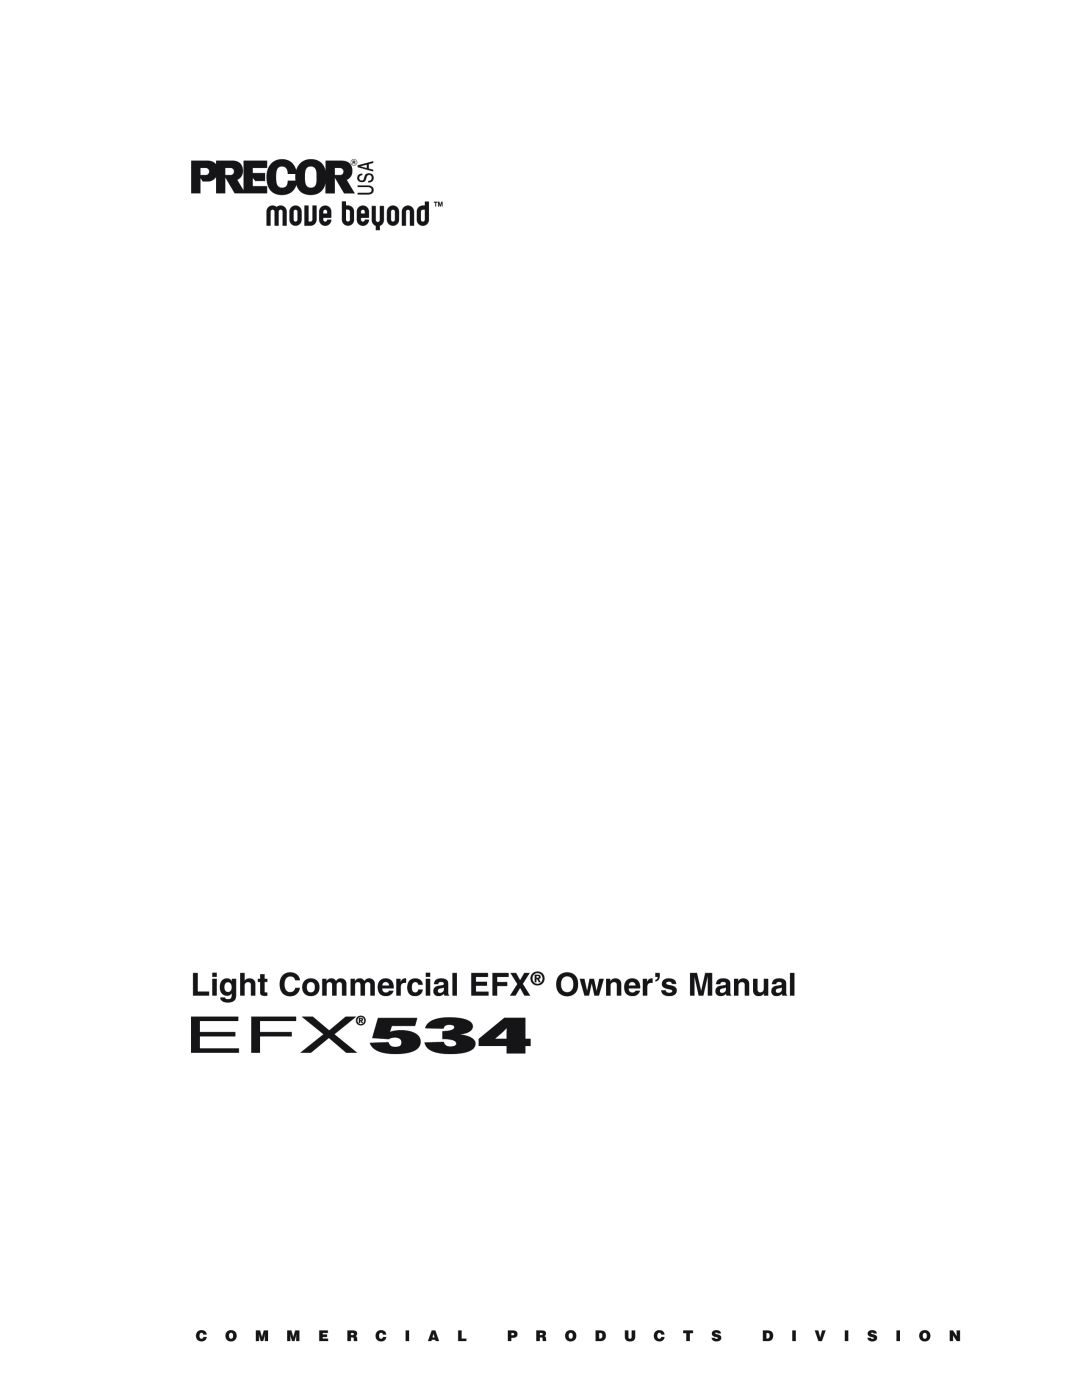 Precor EFX534 owner manual Light Commercial EFX Owner’s Manual, C O M M E R C I A L P R O D U C T S D I V I S I O N 